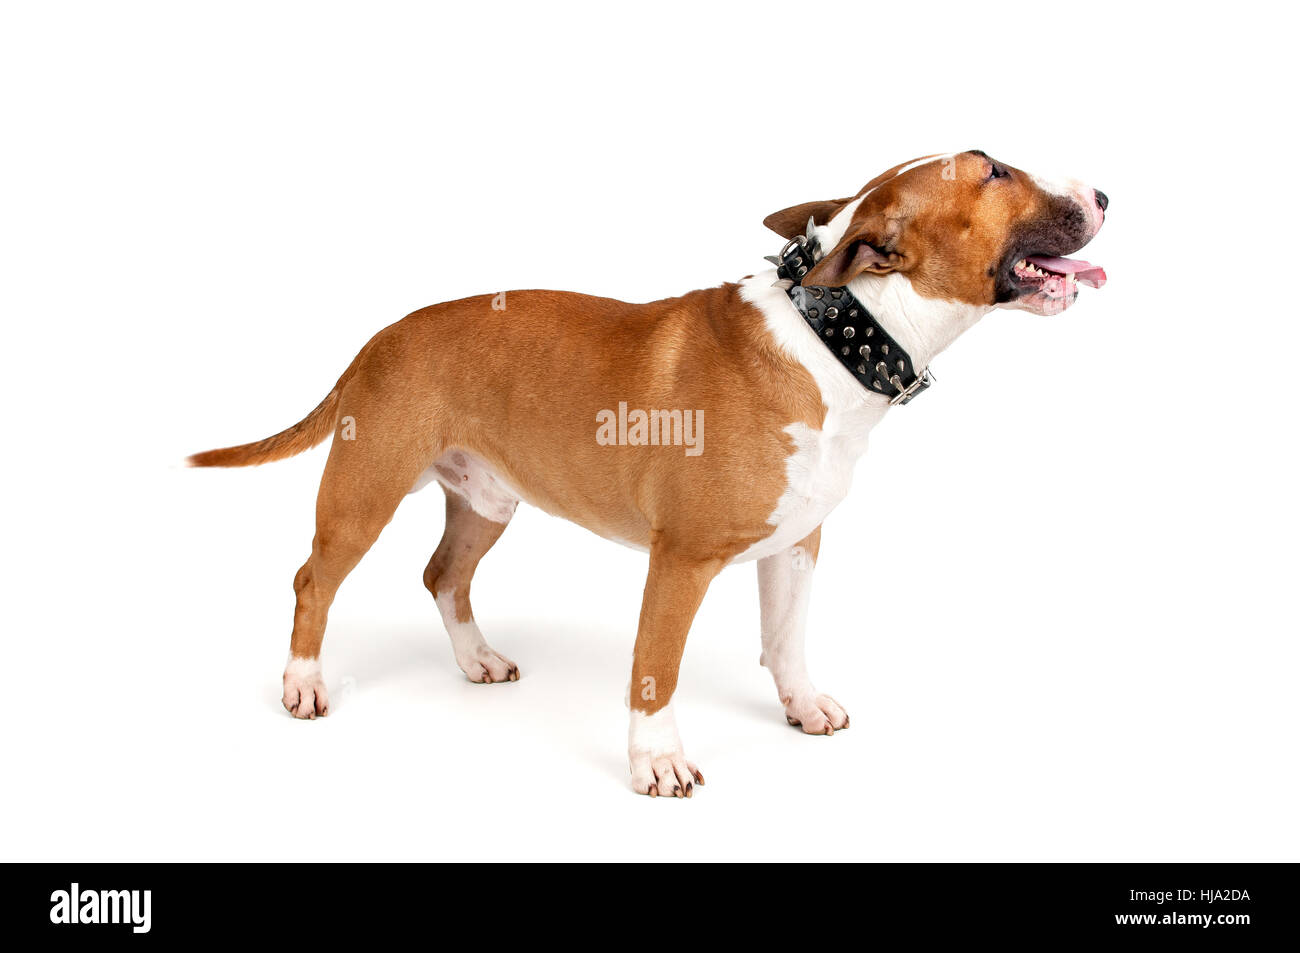 animal, dog, breed, canine, maddening, pert, coquettish, cute, friend, Stock Photo